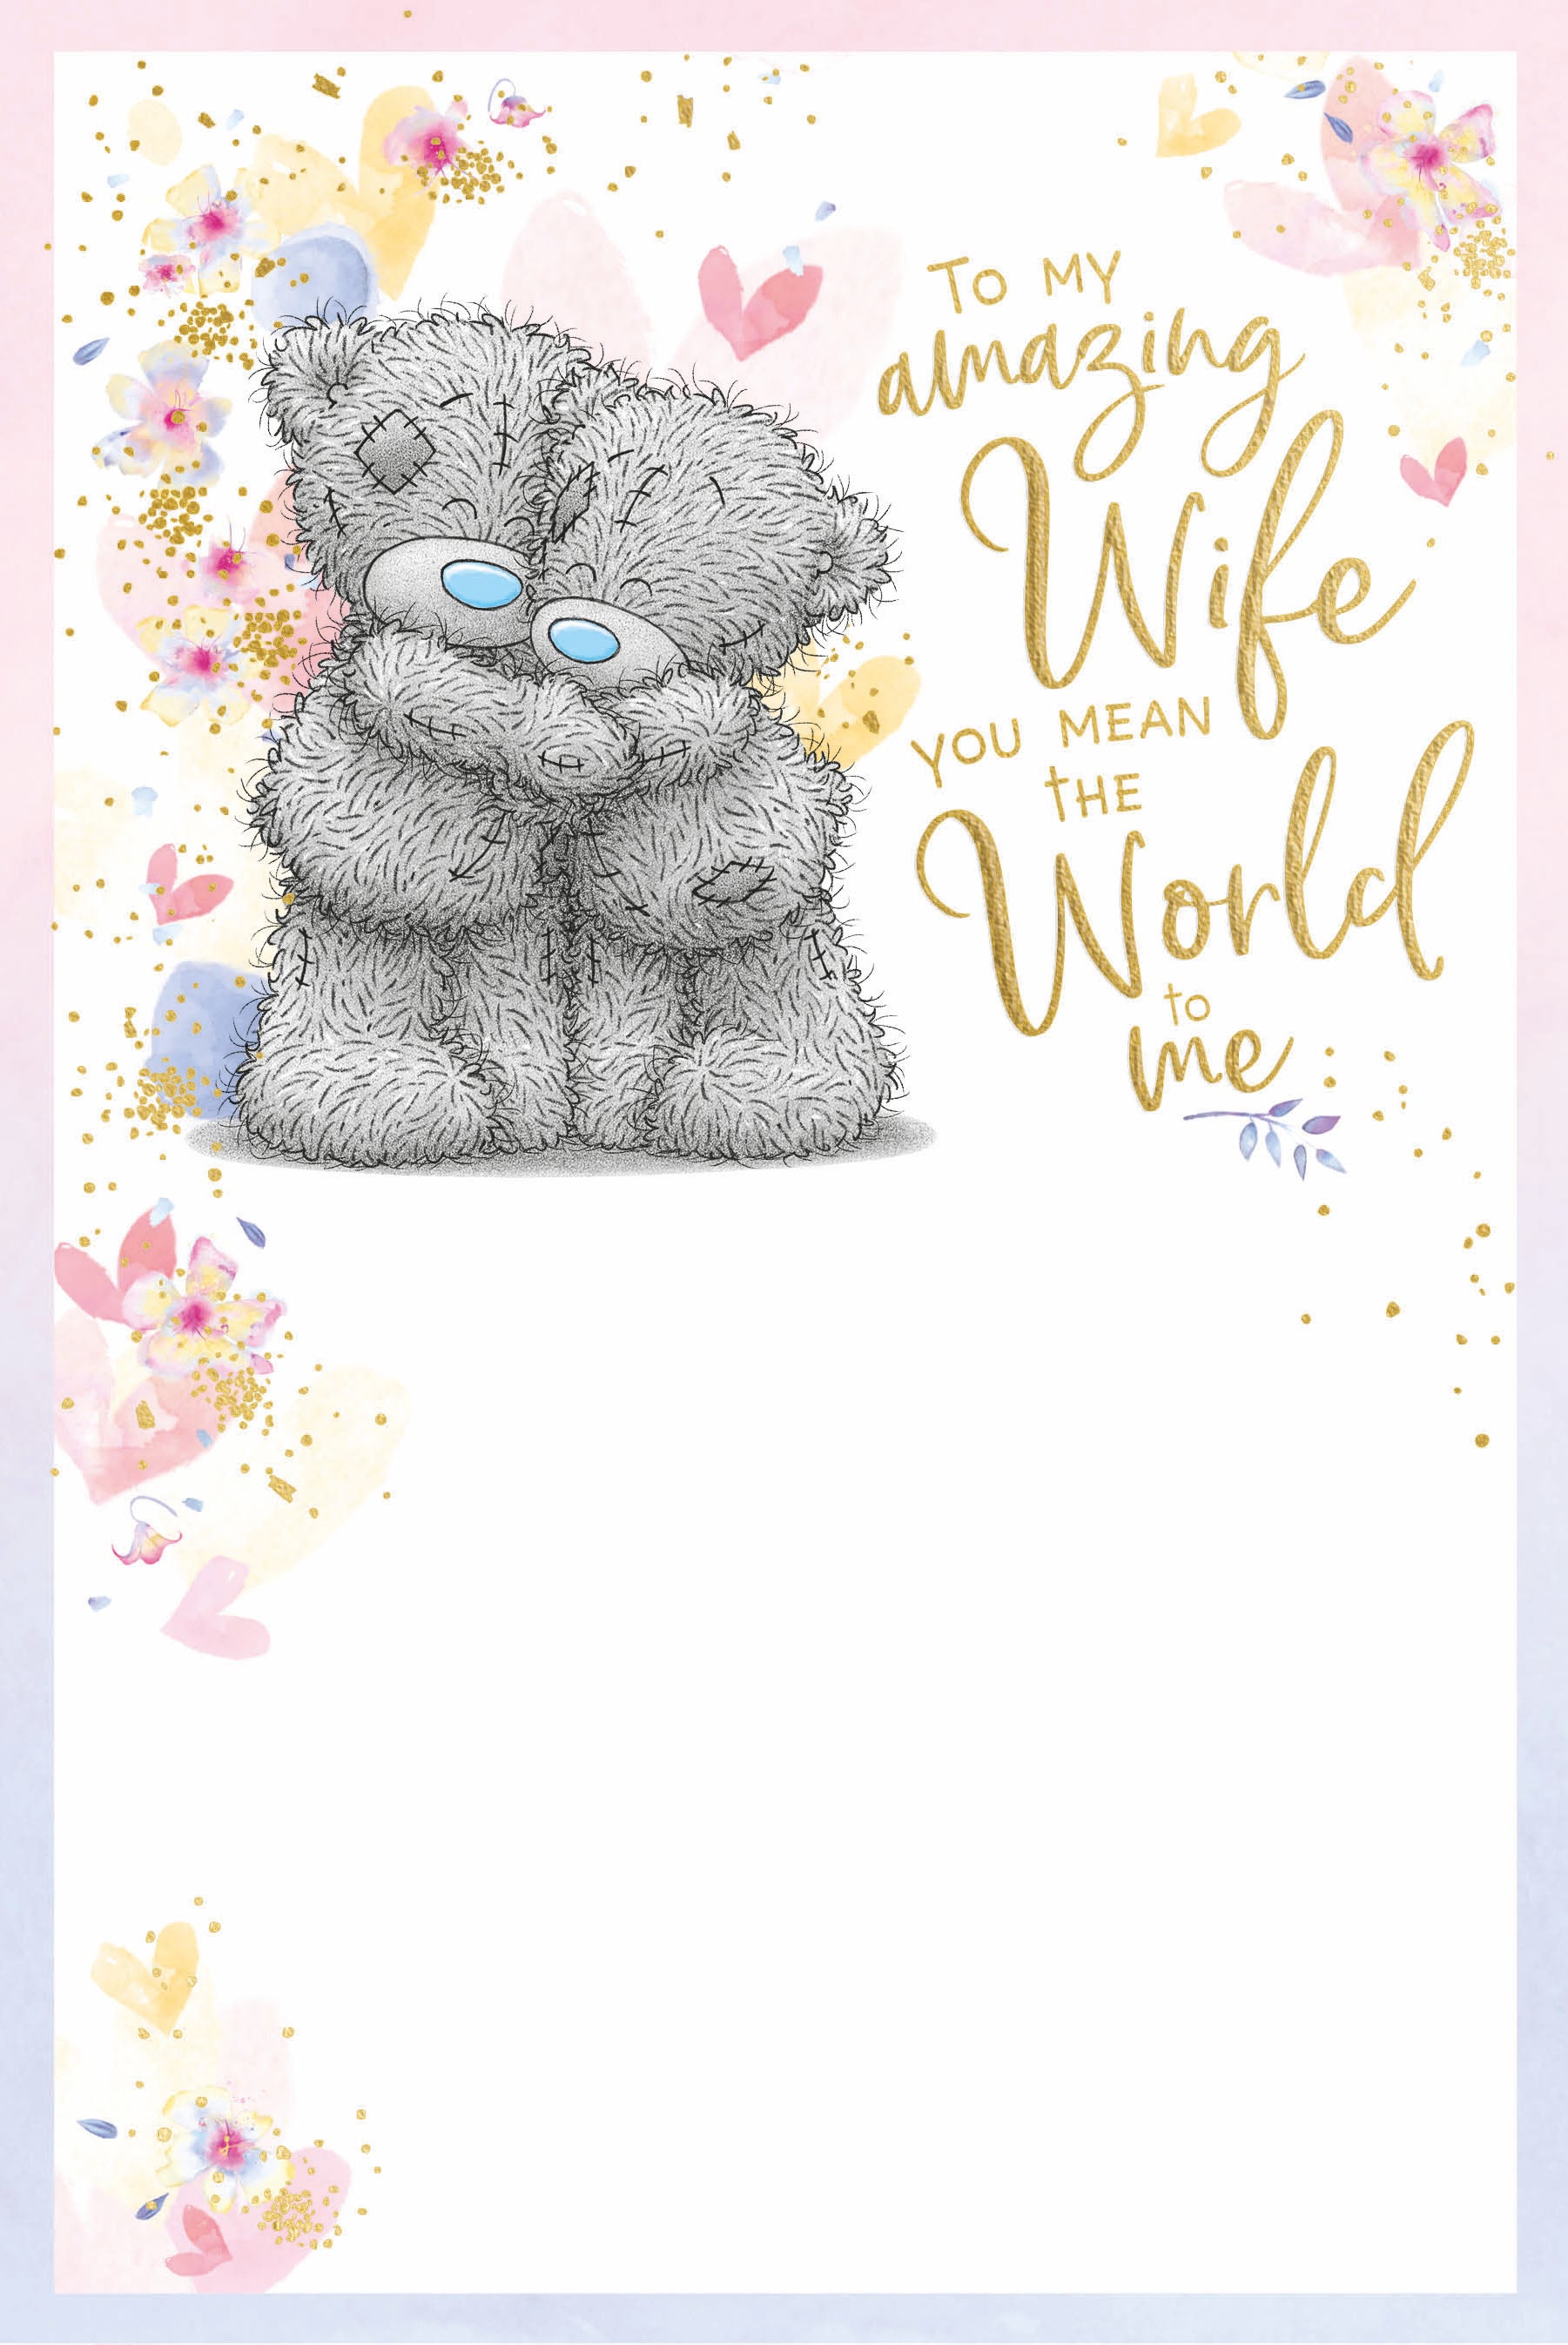 Wife Birthday Card - Bear Hugging